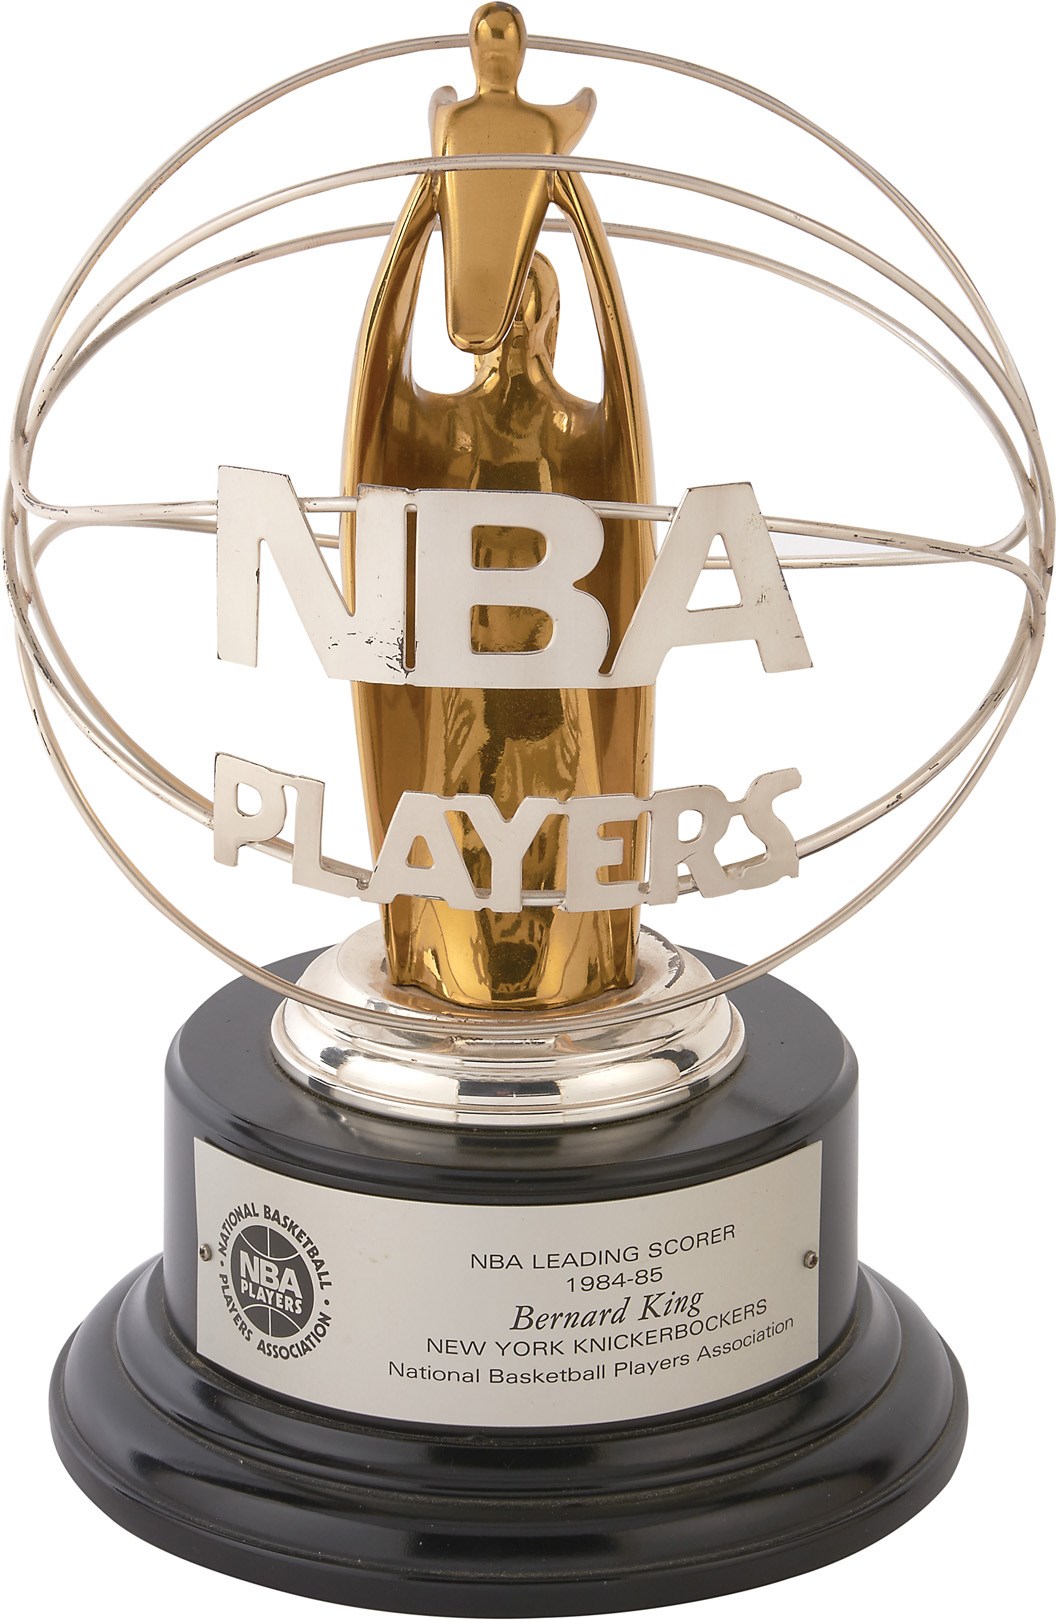 1984-85 Bernard King NBA Leading Scorer Award